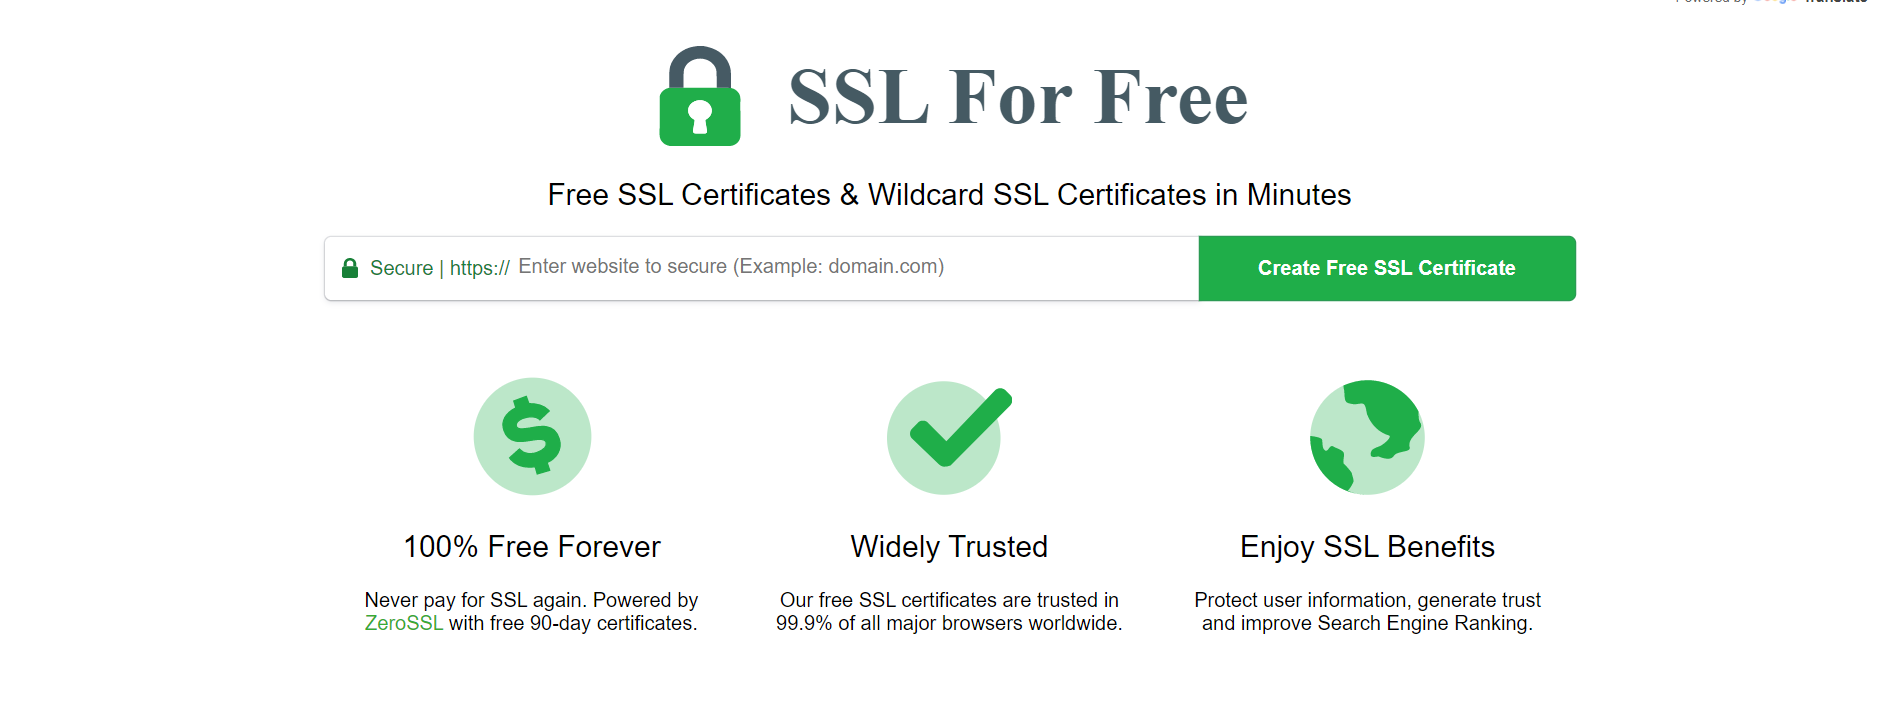 sslforfree free ssl certificate